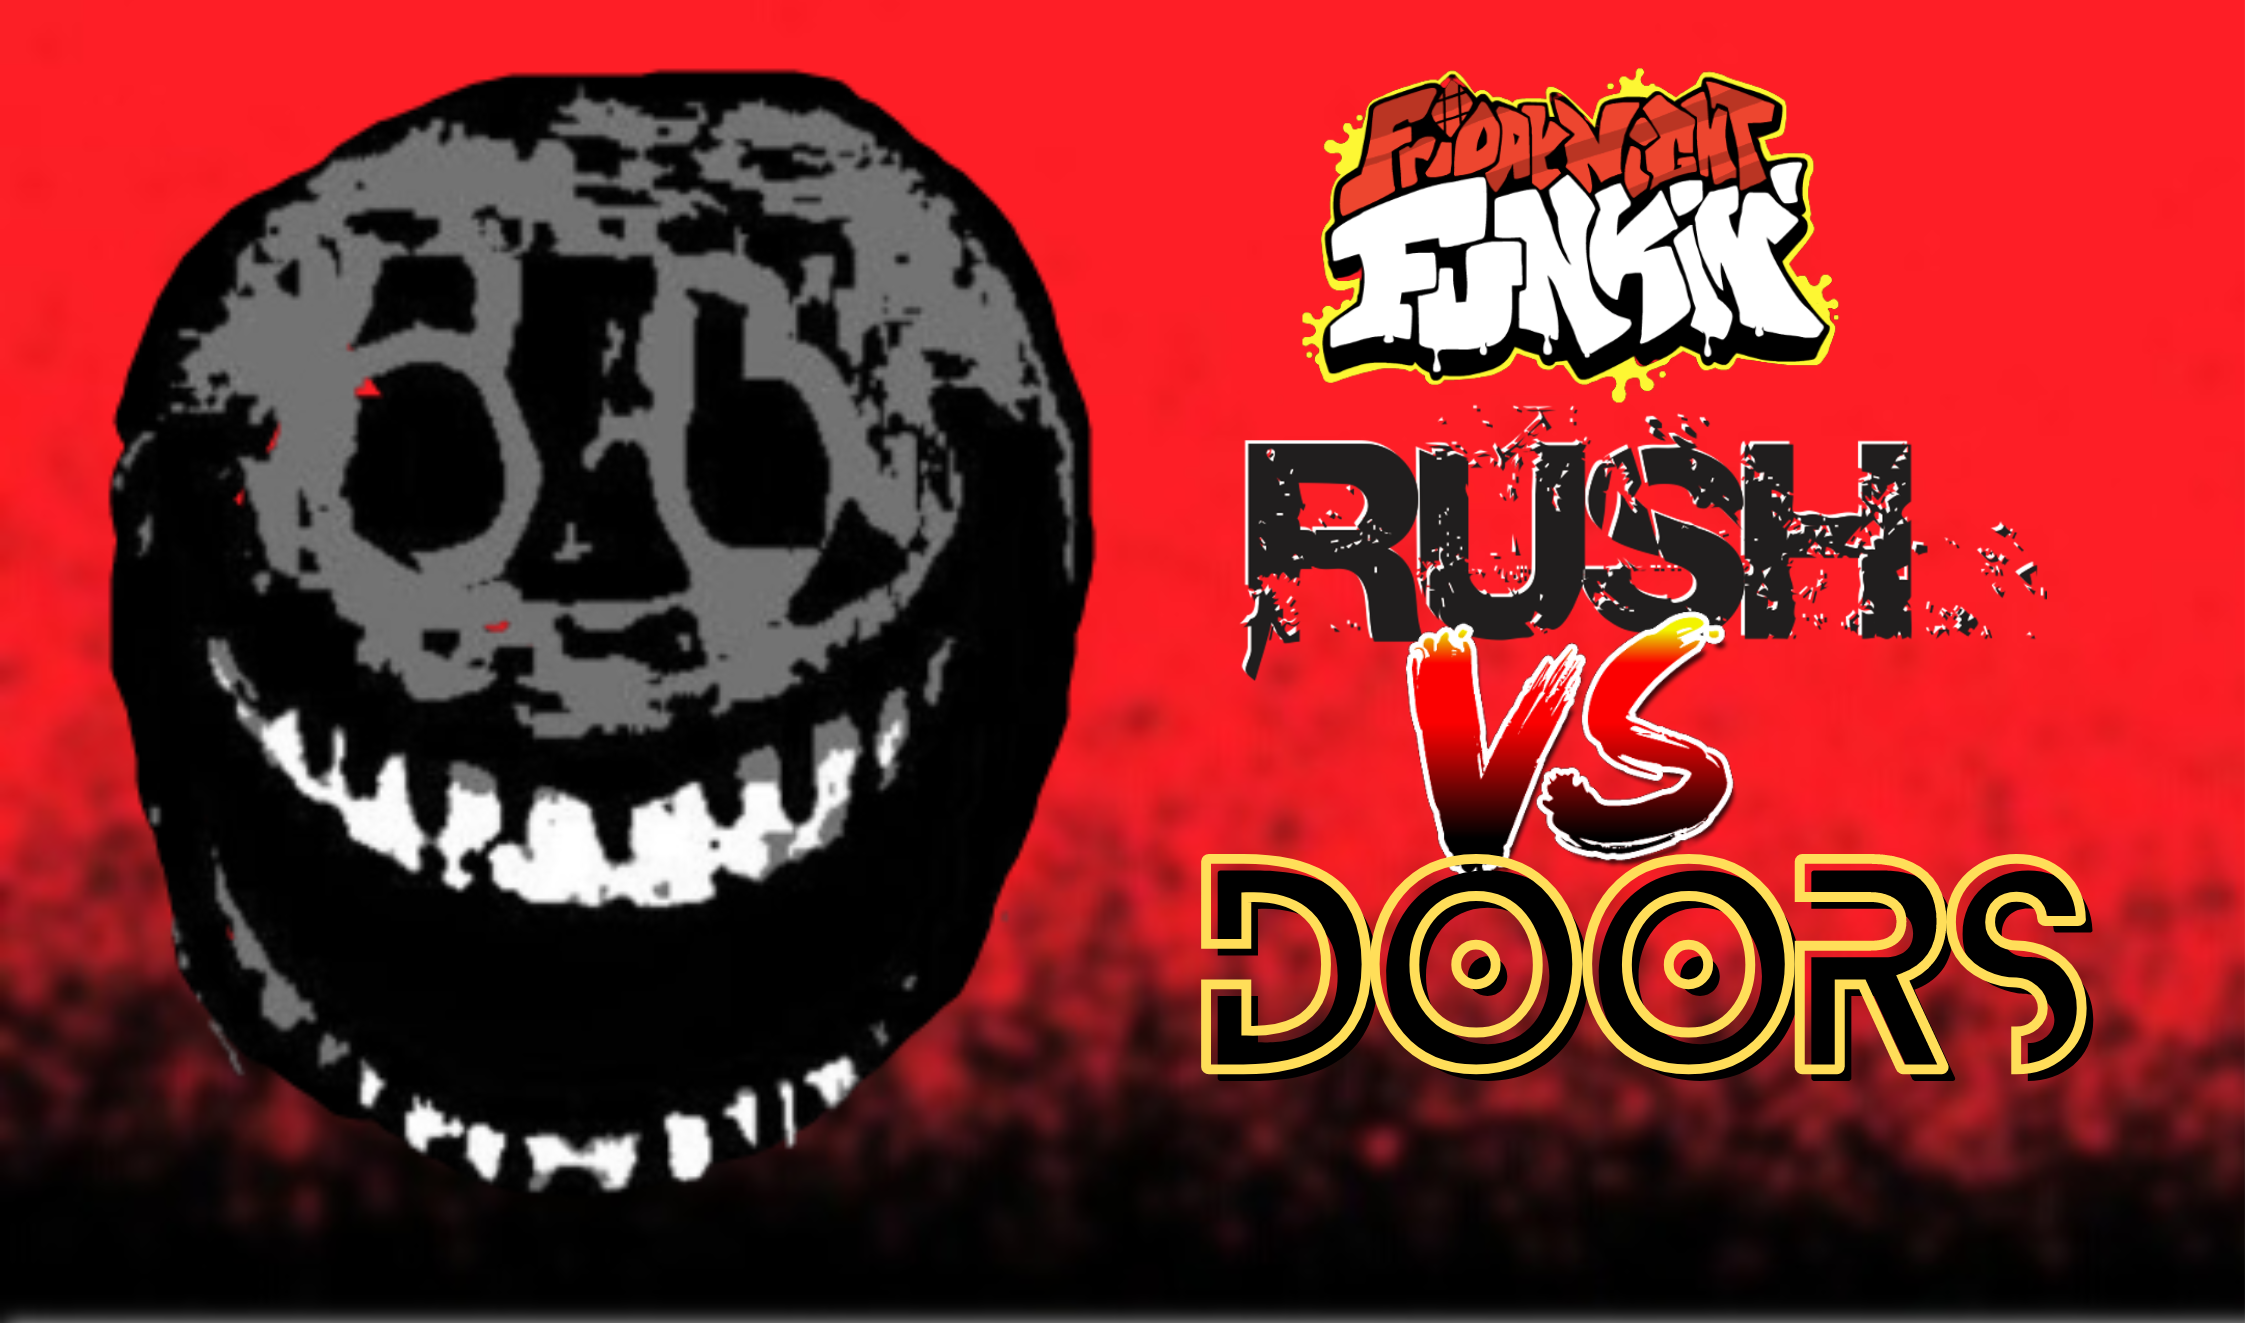 Fnf Doors Vs Rush (roblox) - Fnf Games